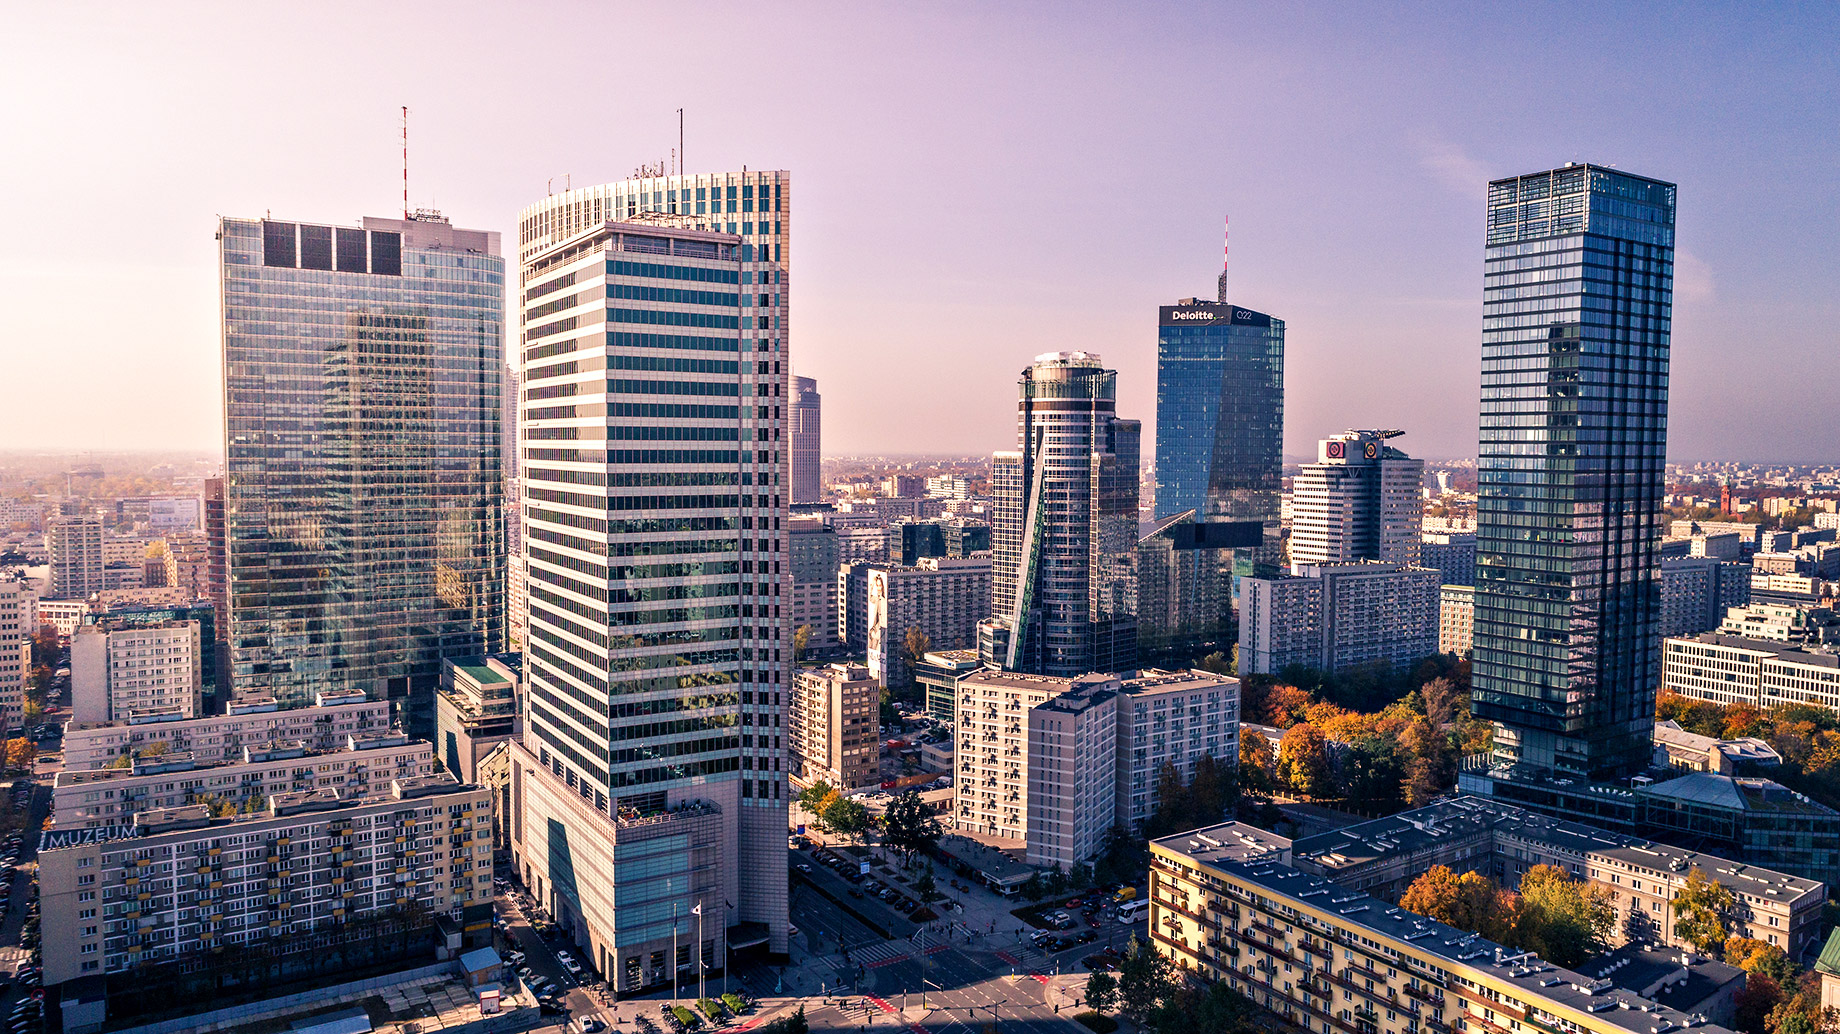 Warsaw, Poland - A Modern Metropolis with Historical Charm